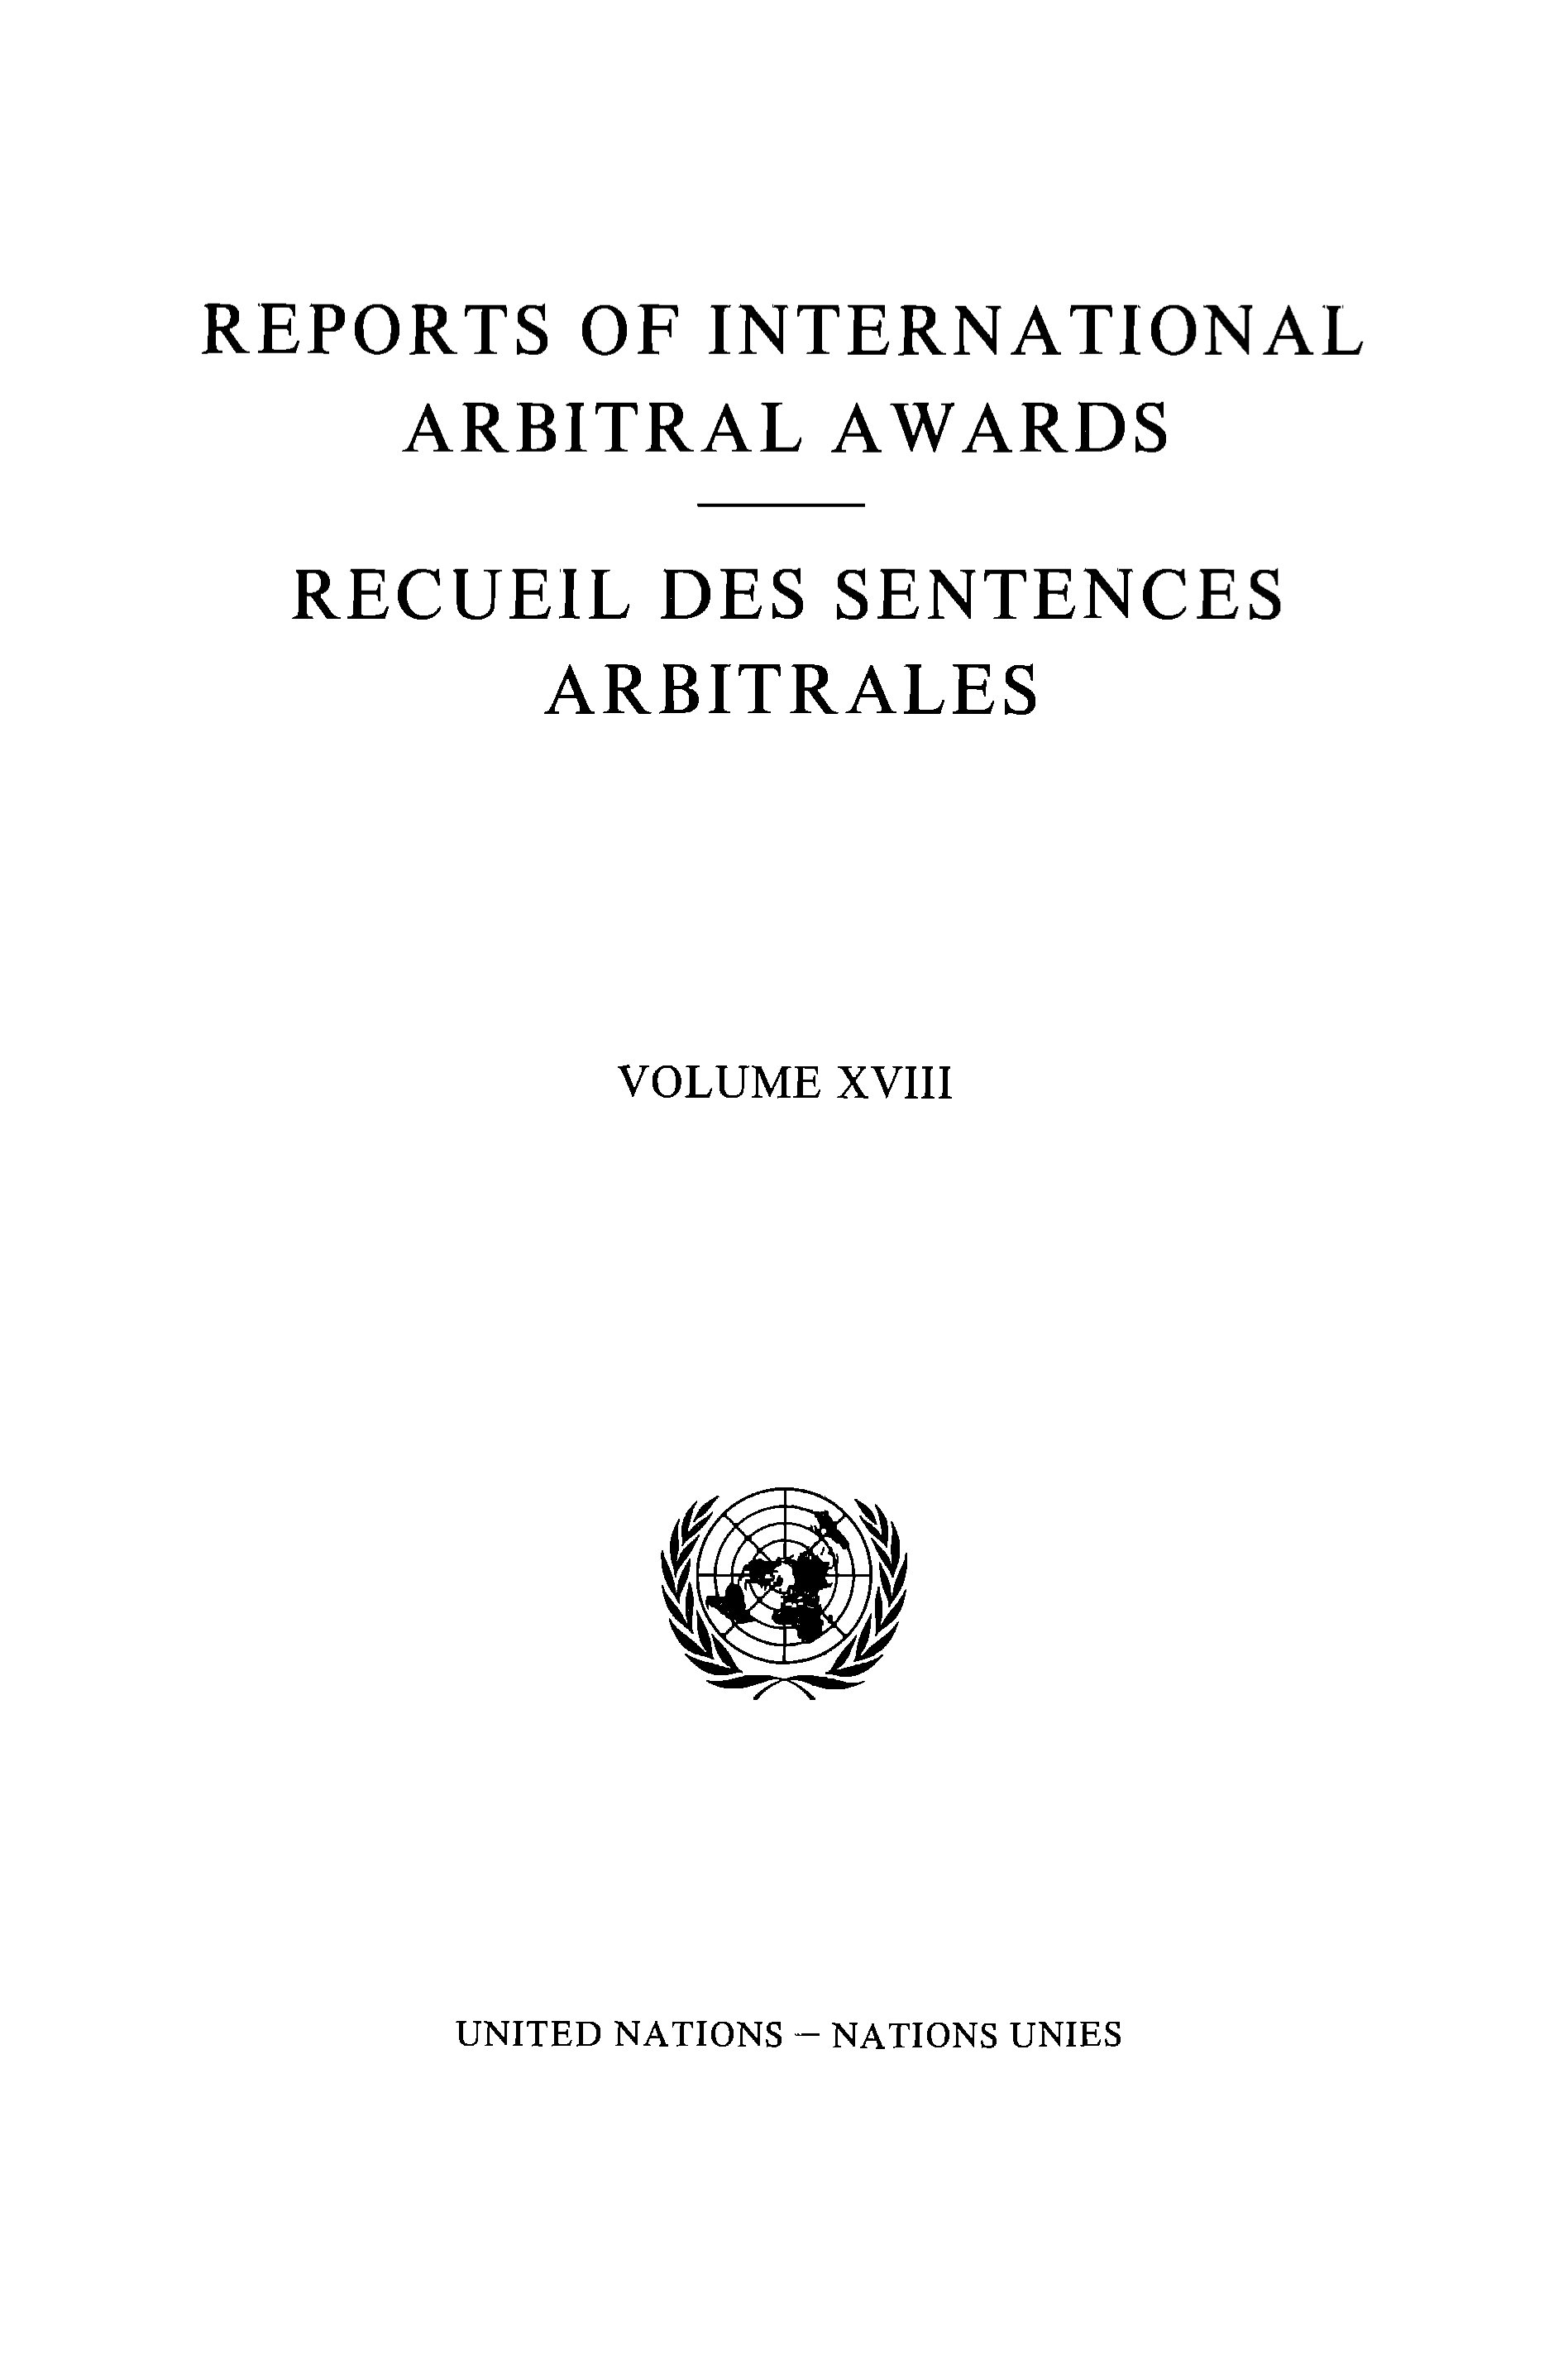 image of Reports of International Arbitral Awards, Vol. XVIII